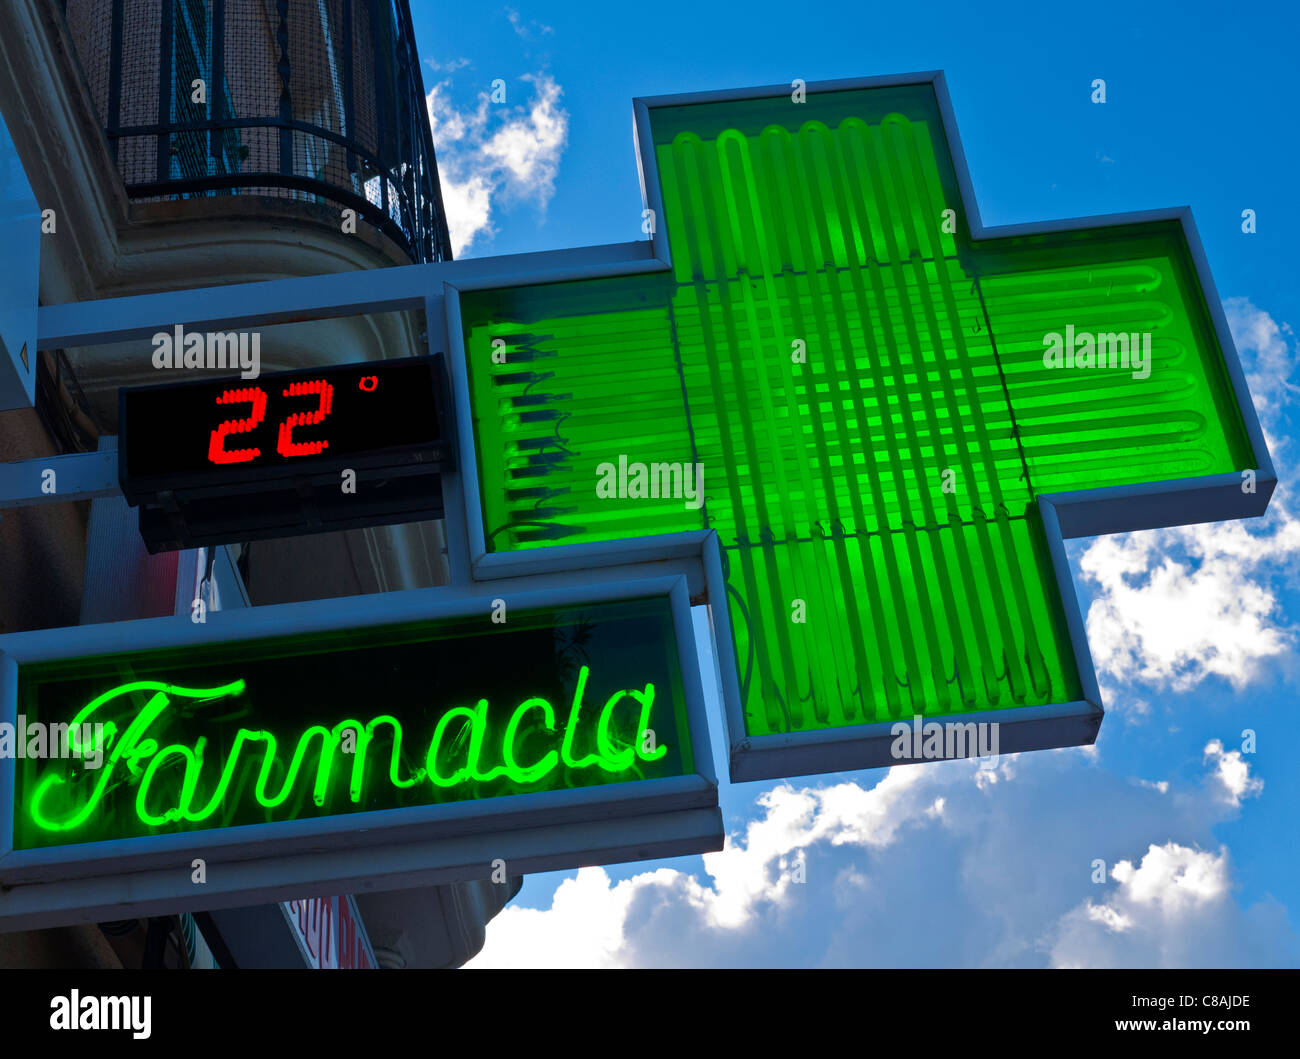 Spanish 'Farmacia' green cross sign showing 22C outside chemist pharmacy shop in Palma Mallorca Spain Stock Photo